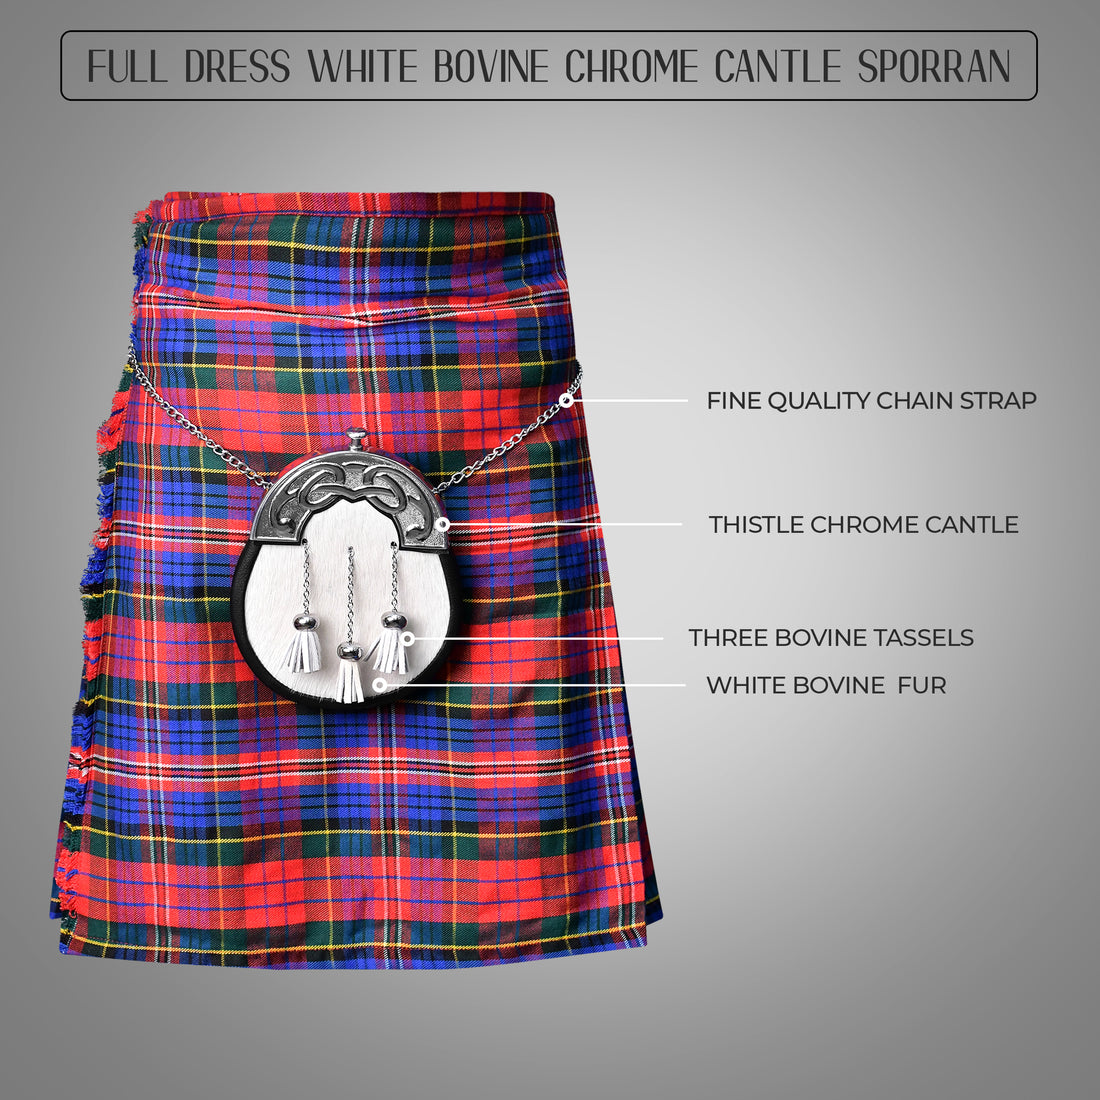 Scottish White Bovine Sporran with chain belt Premium quality kilt sporran for men